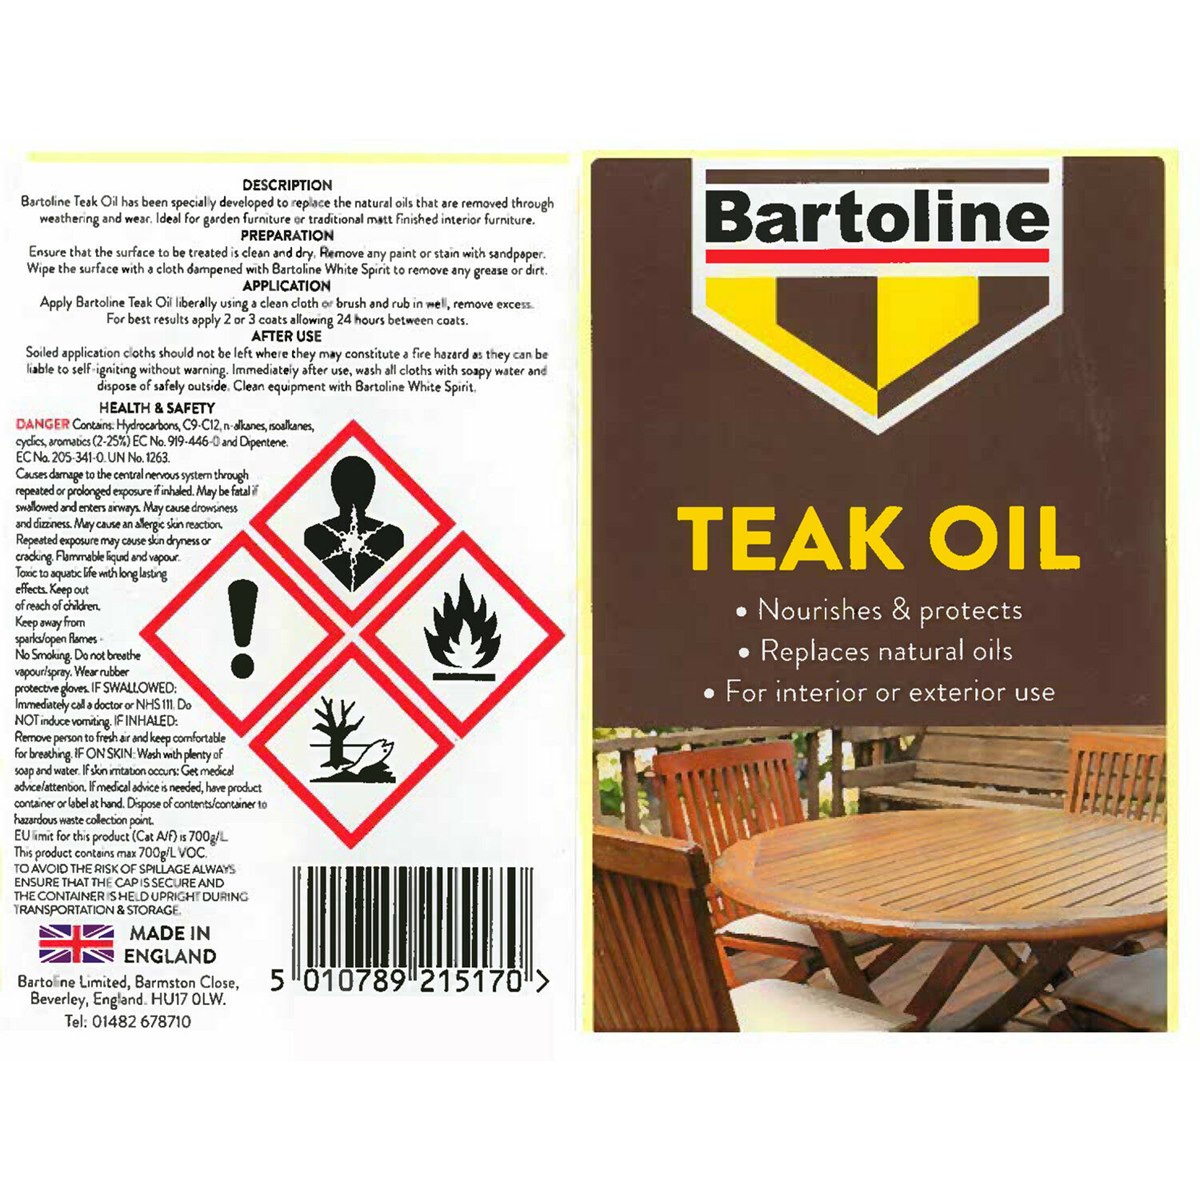 How to Use Bartoline Teak Oil